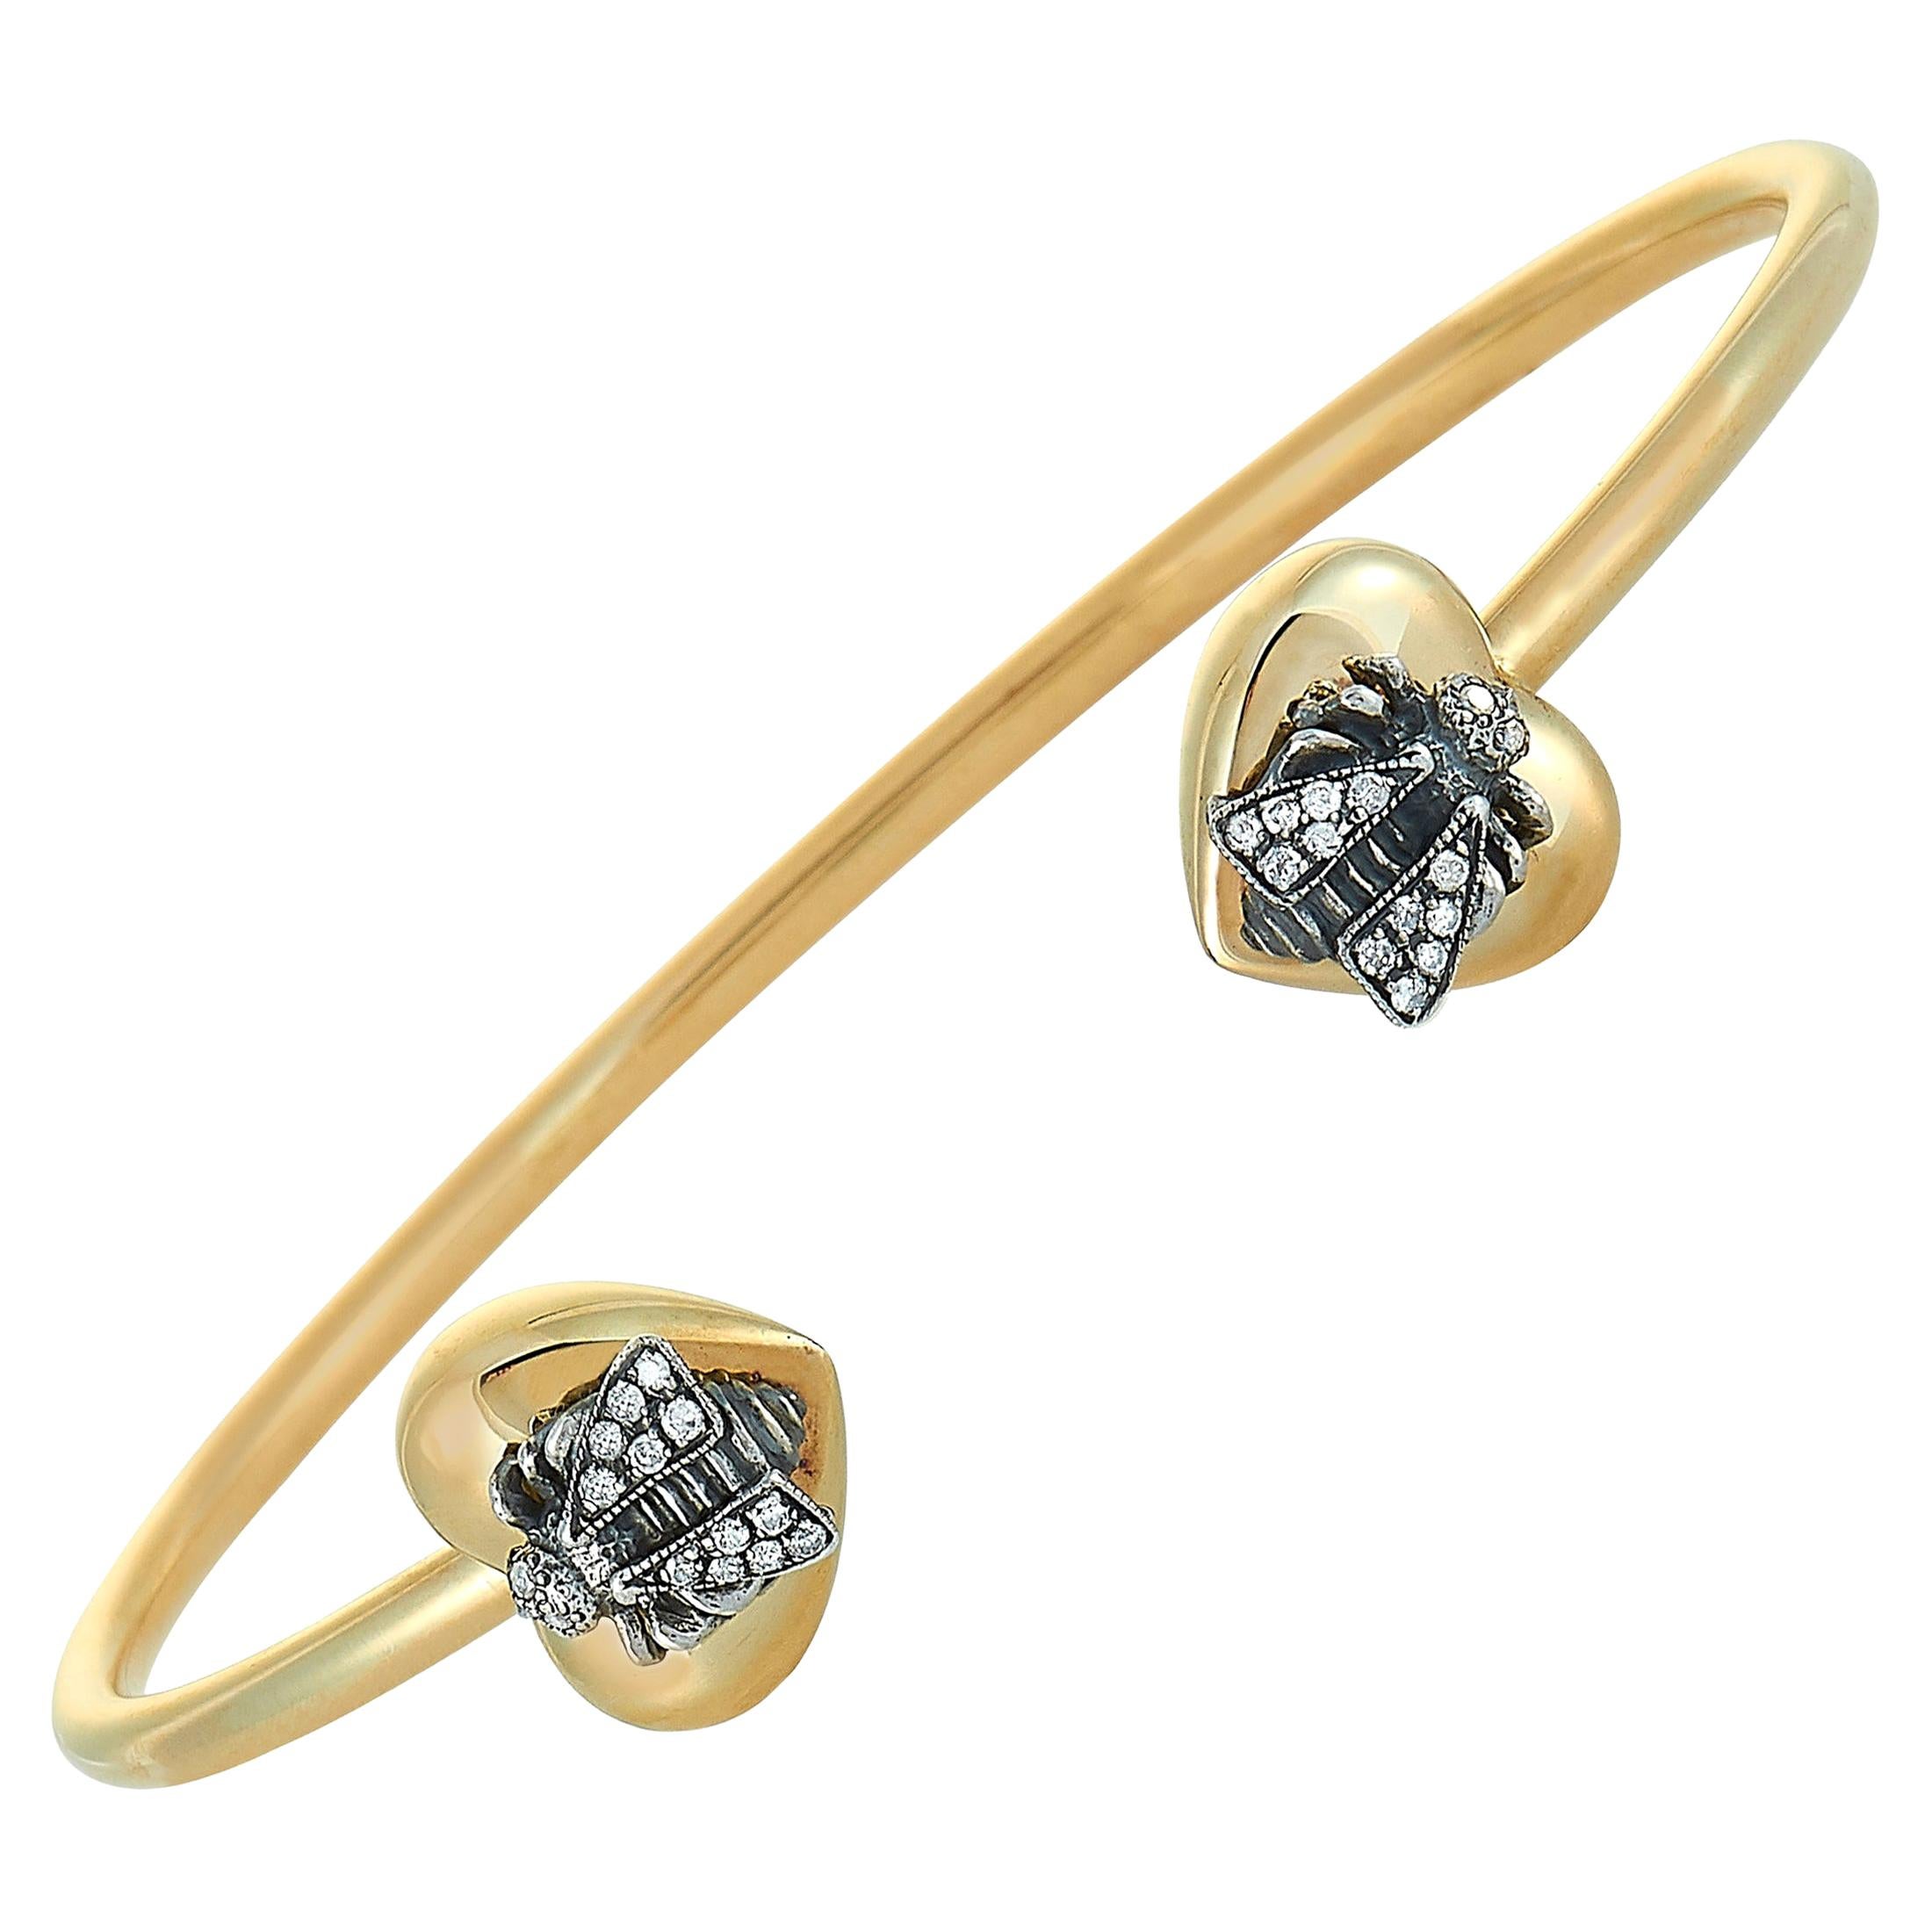 Gucci Le Marché des Merveilles Gold and Aged Silver Gray Diamond Bee Bracelet